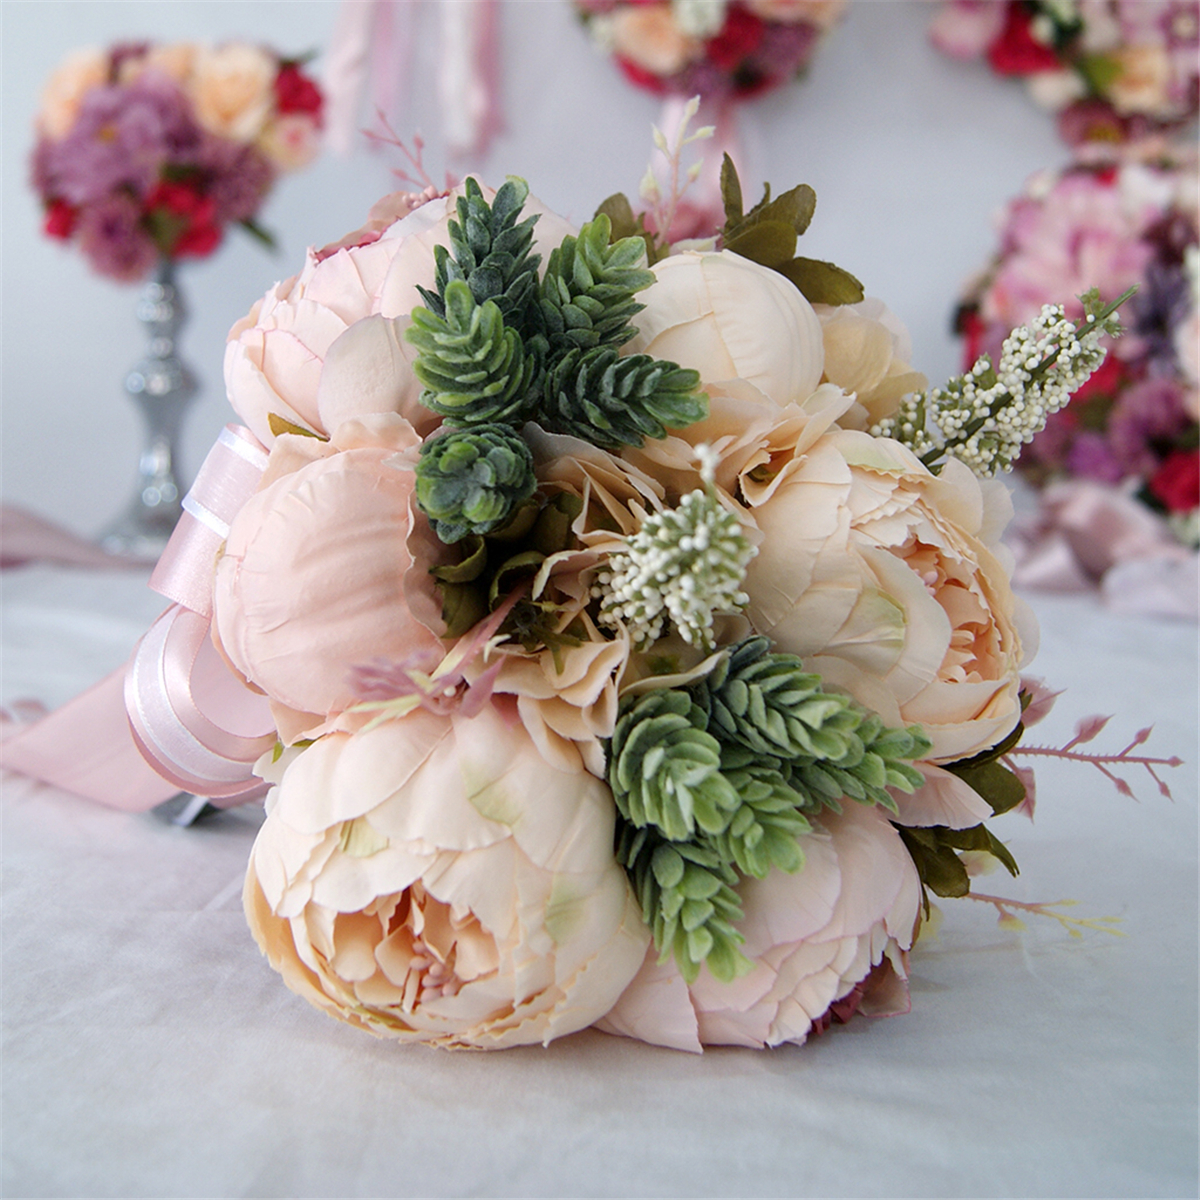 Wedding-Bridal-Bouquets-Handmade-Artificial-Flowers-Decorations-Bride-Accessories-1643090-5